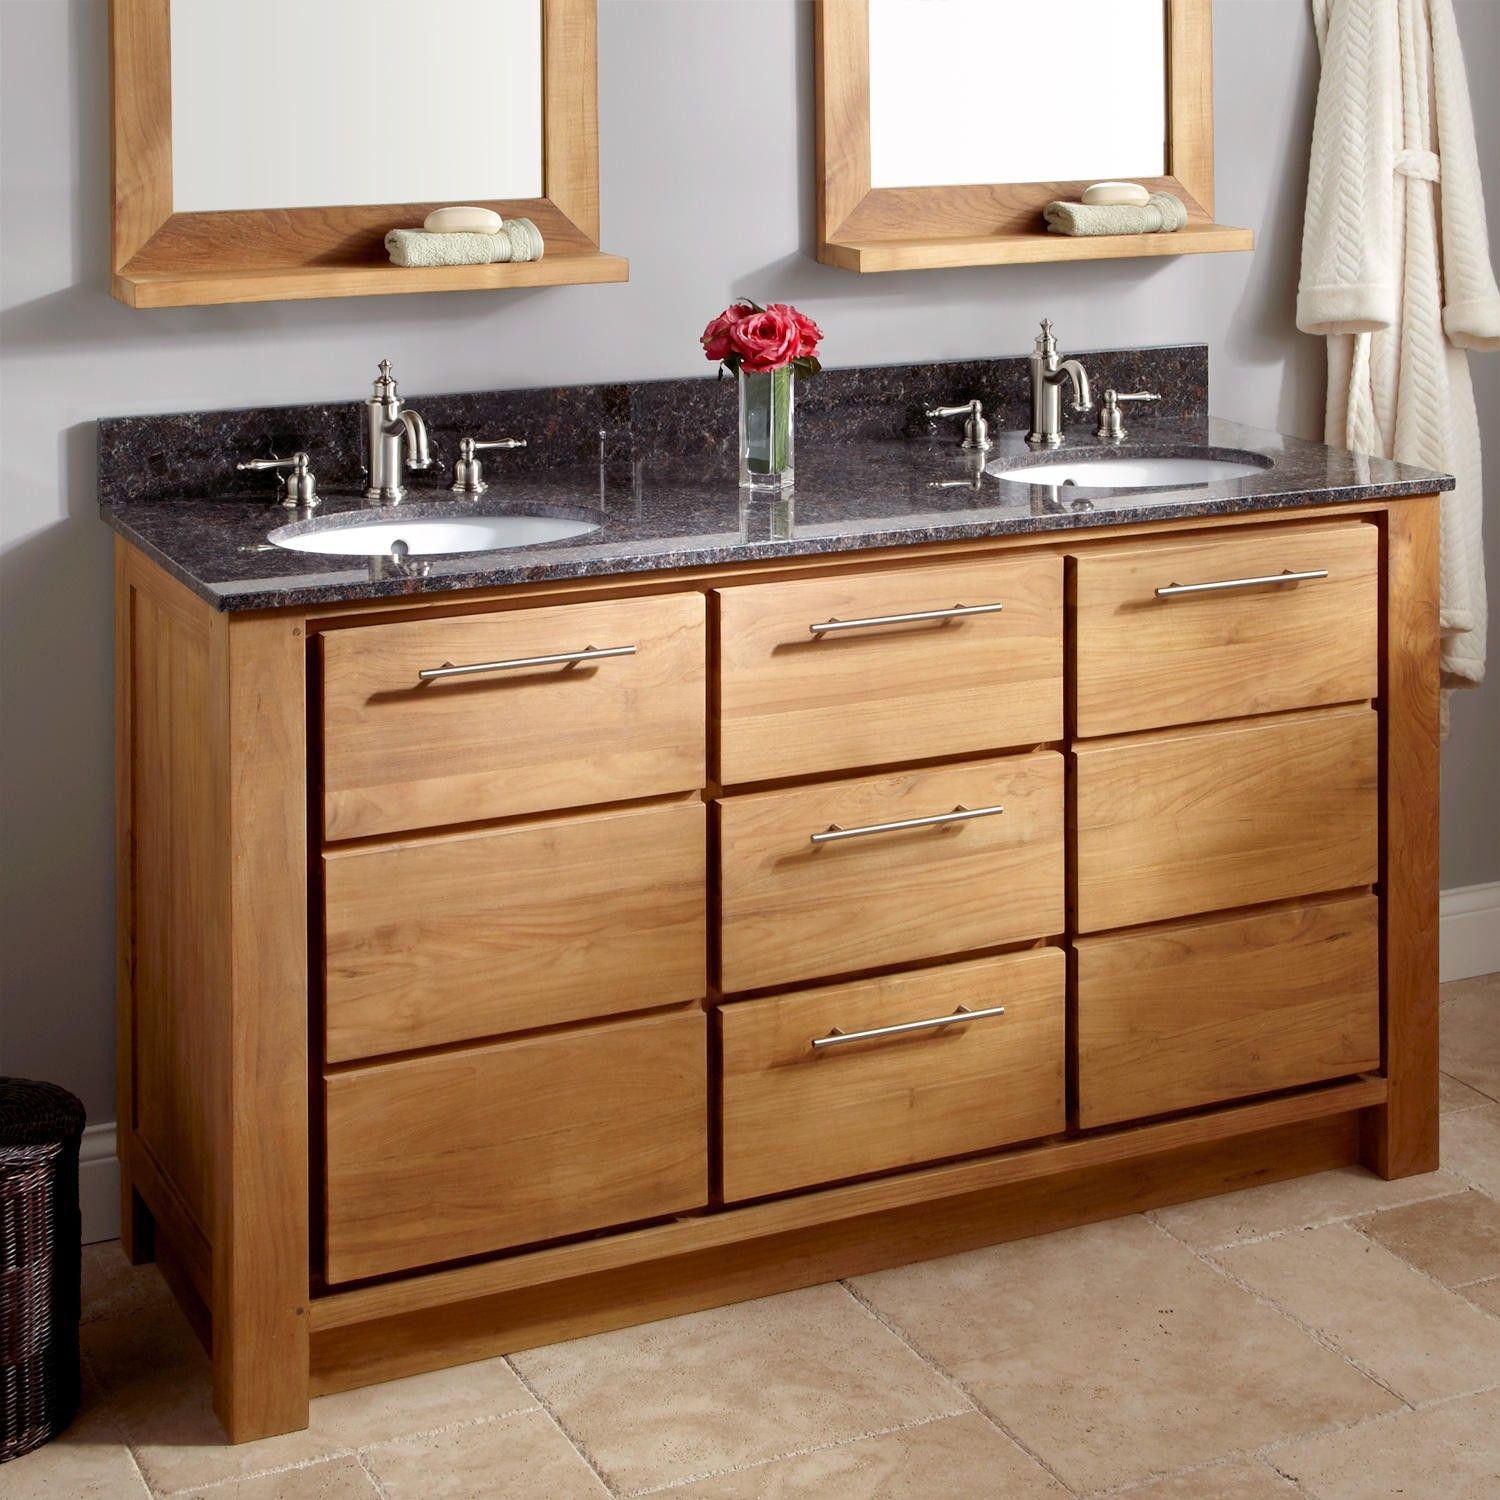 Teak Bathroom Cabinet
 60" Venica Teak Double Vanity for Undermount Sinks